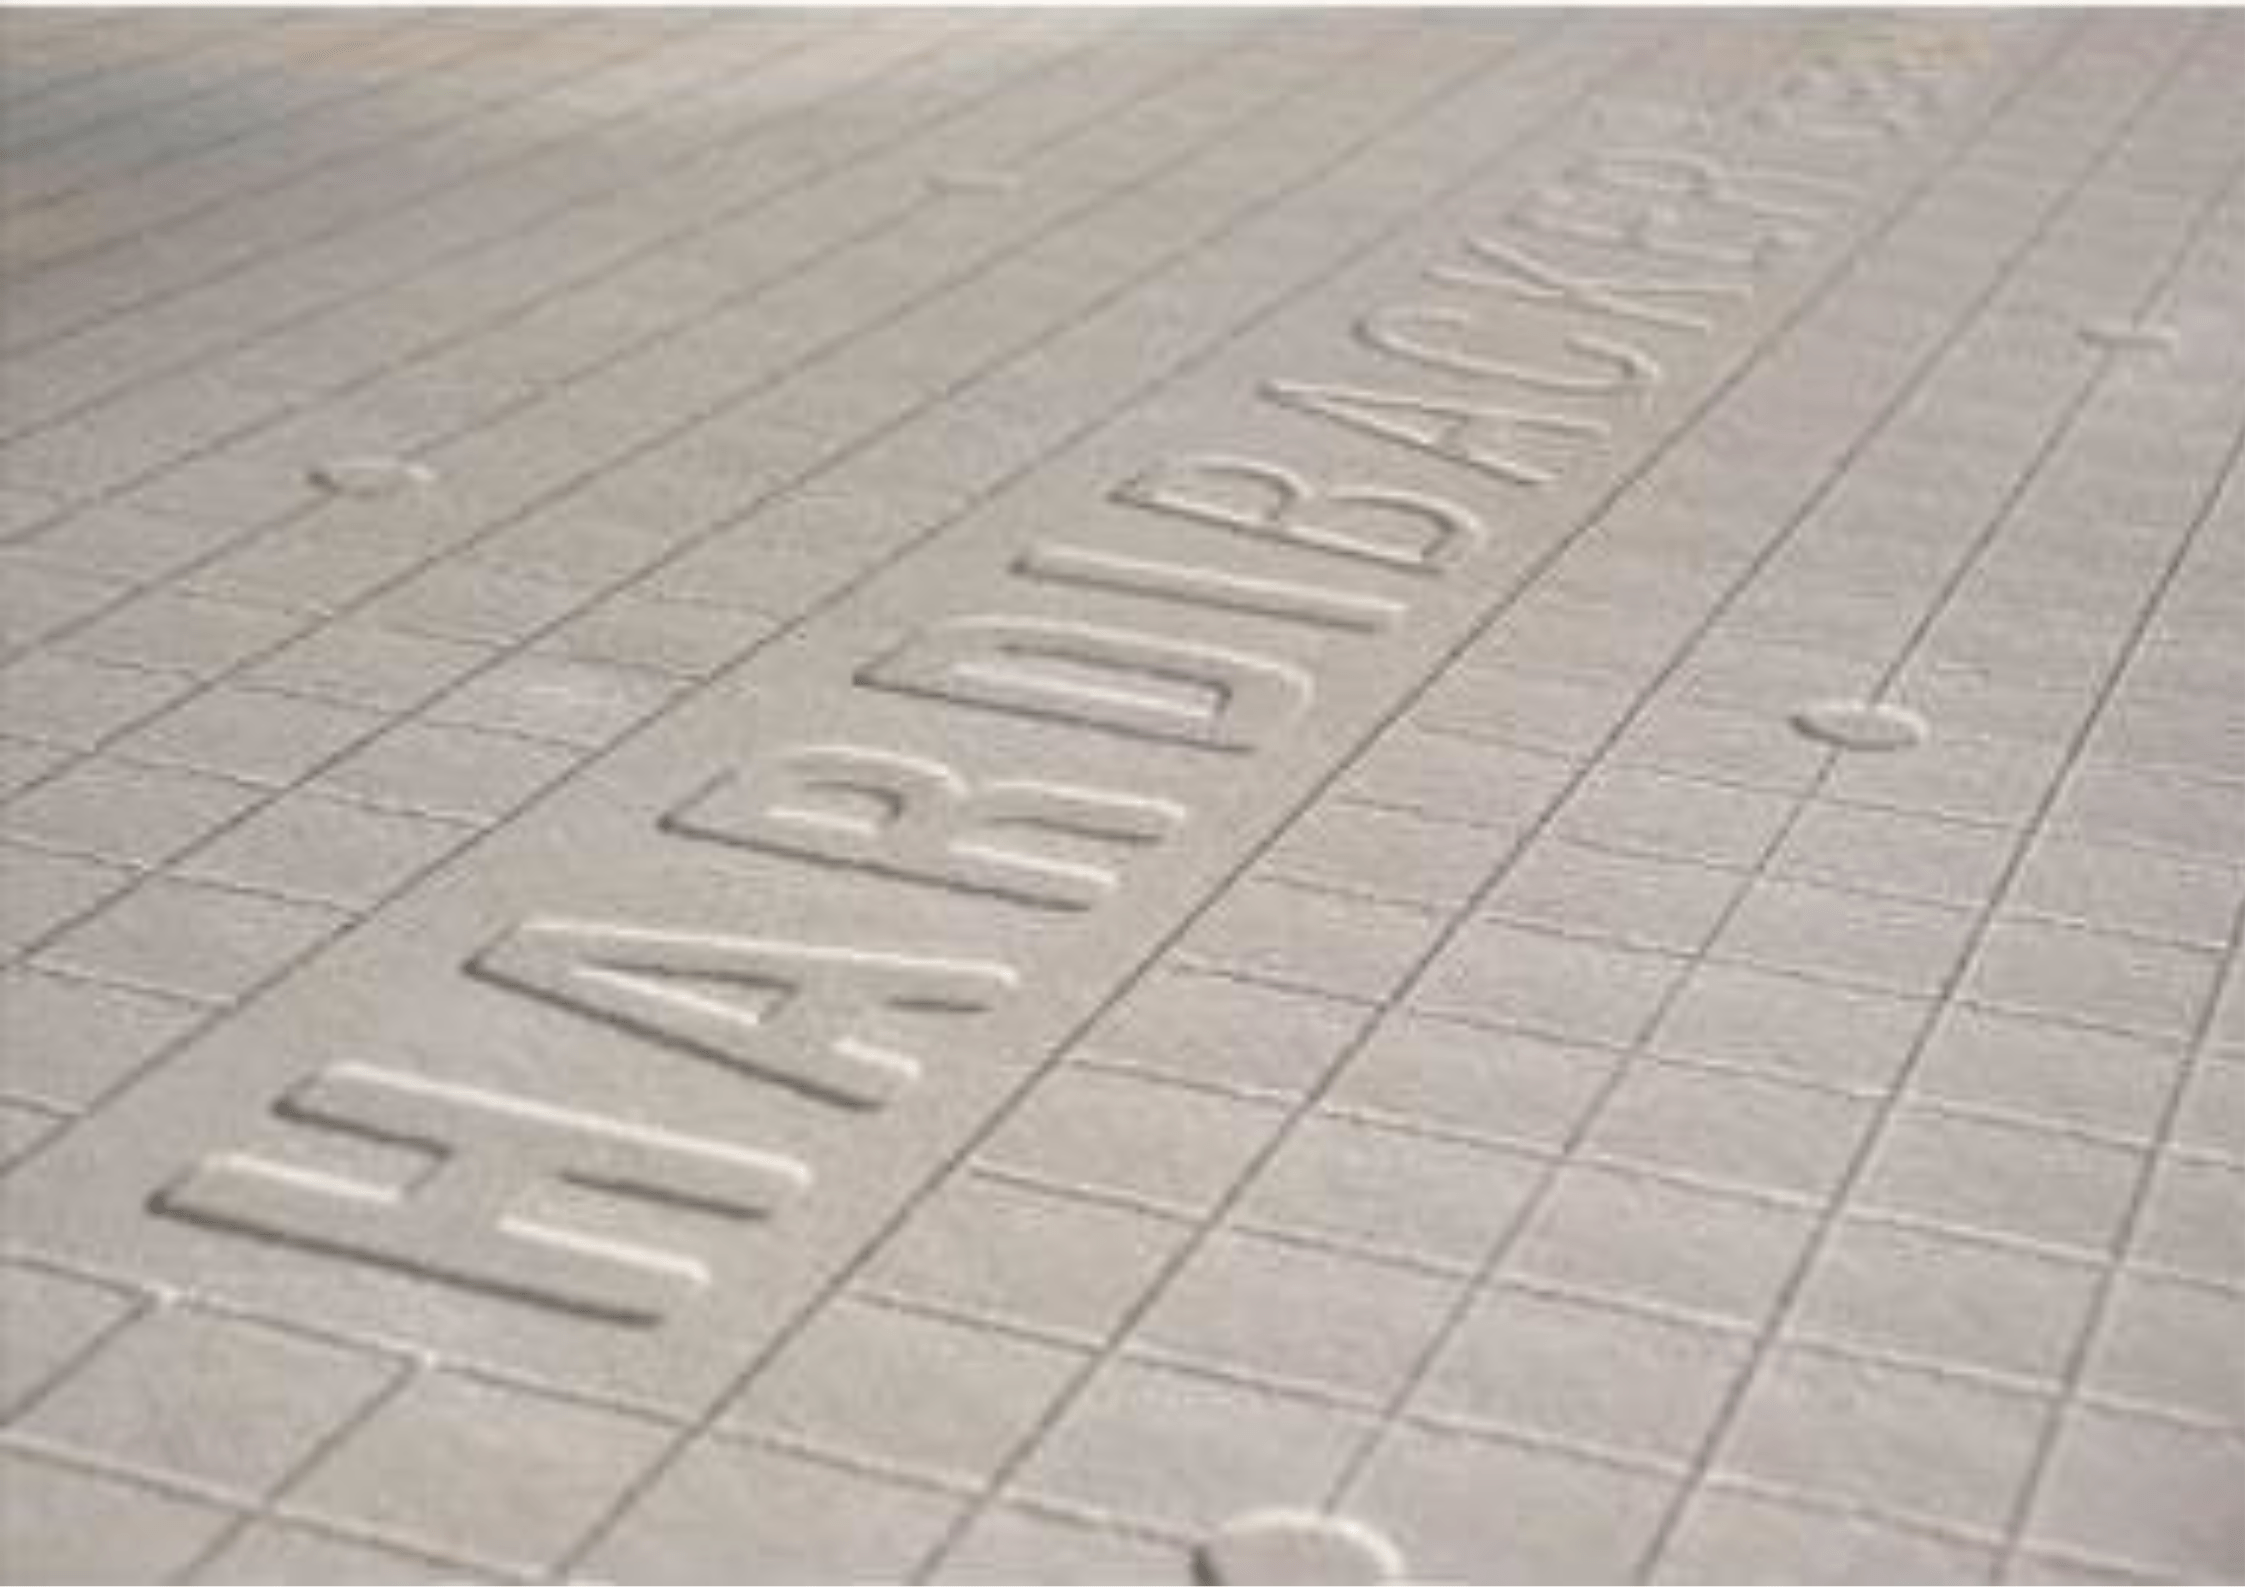 James Hardie Hardie® Backer Tile Backerboard 1200mm x 800mm x 12mm IUK01635 Hardie® Backer Tile Backerboard 1200mm x 800mm x 12mm | insulationuk.co.uk